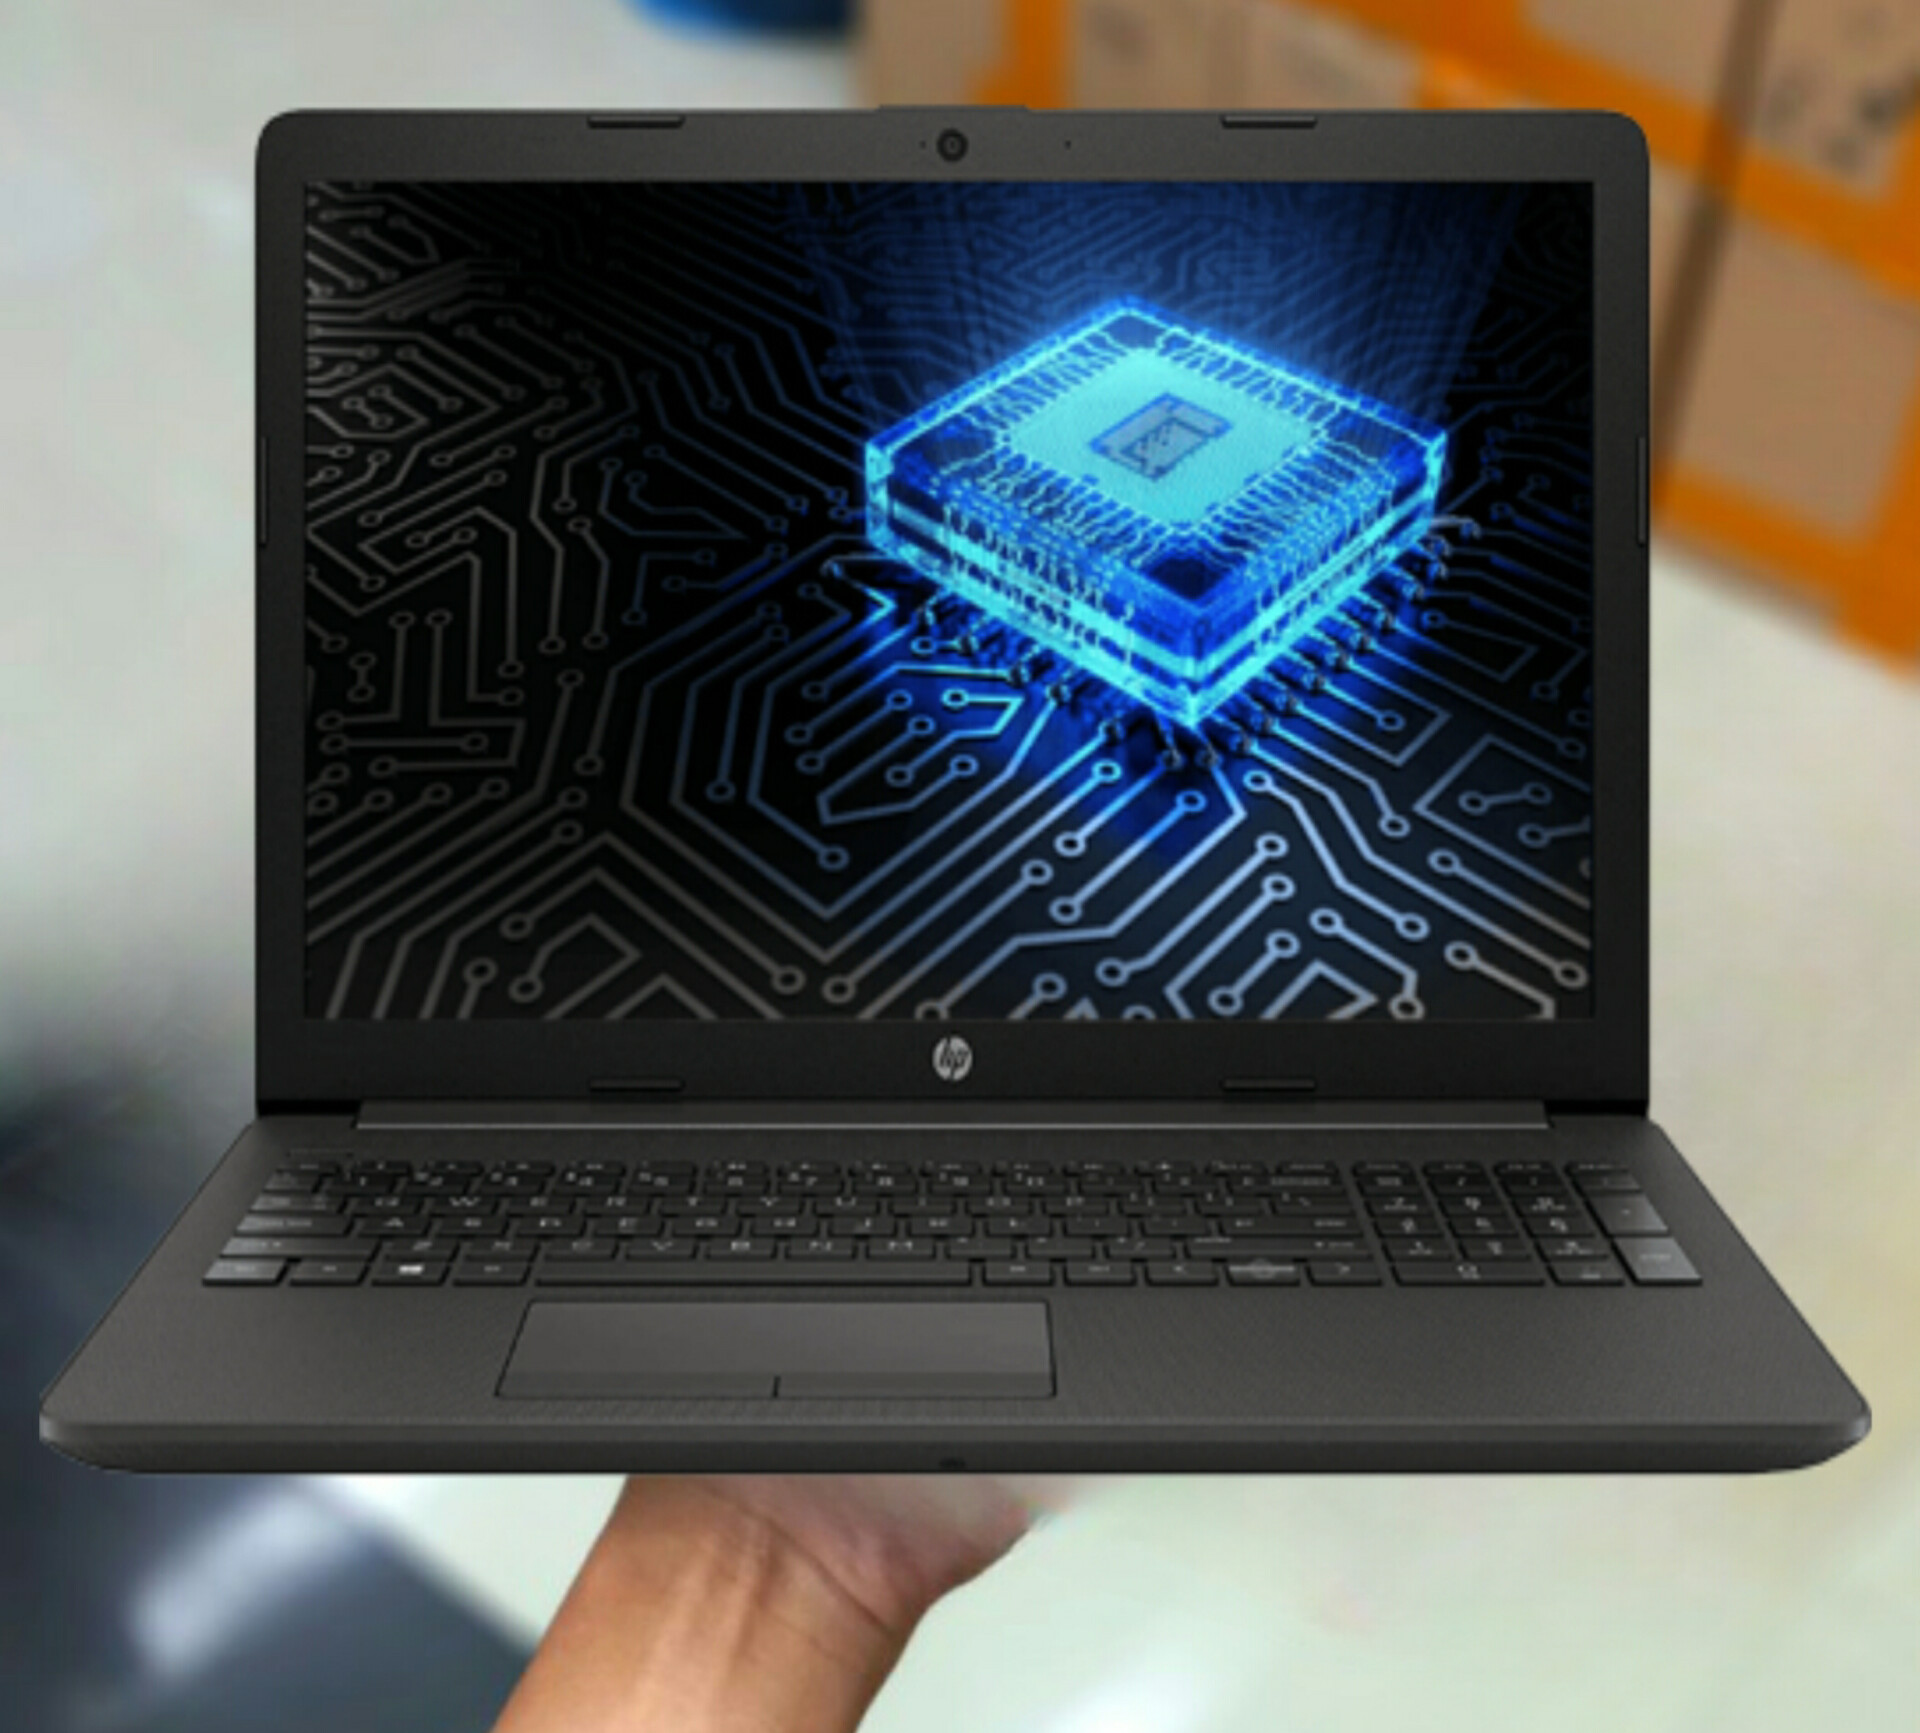 HP NoteBook 250 G6 Laptop Price in Pakistan